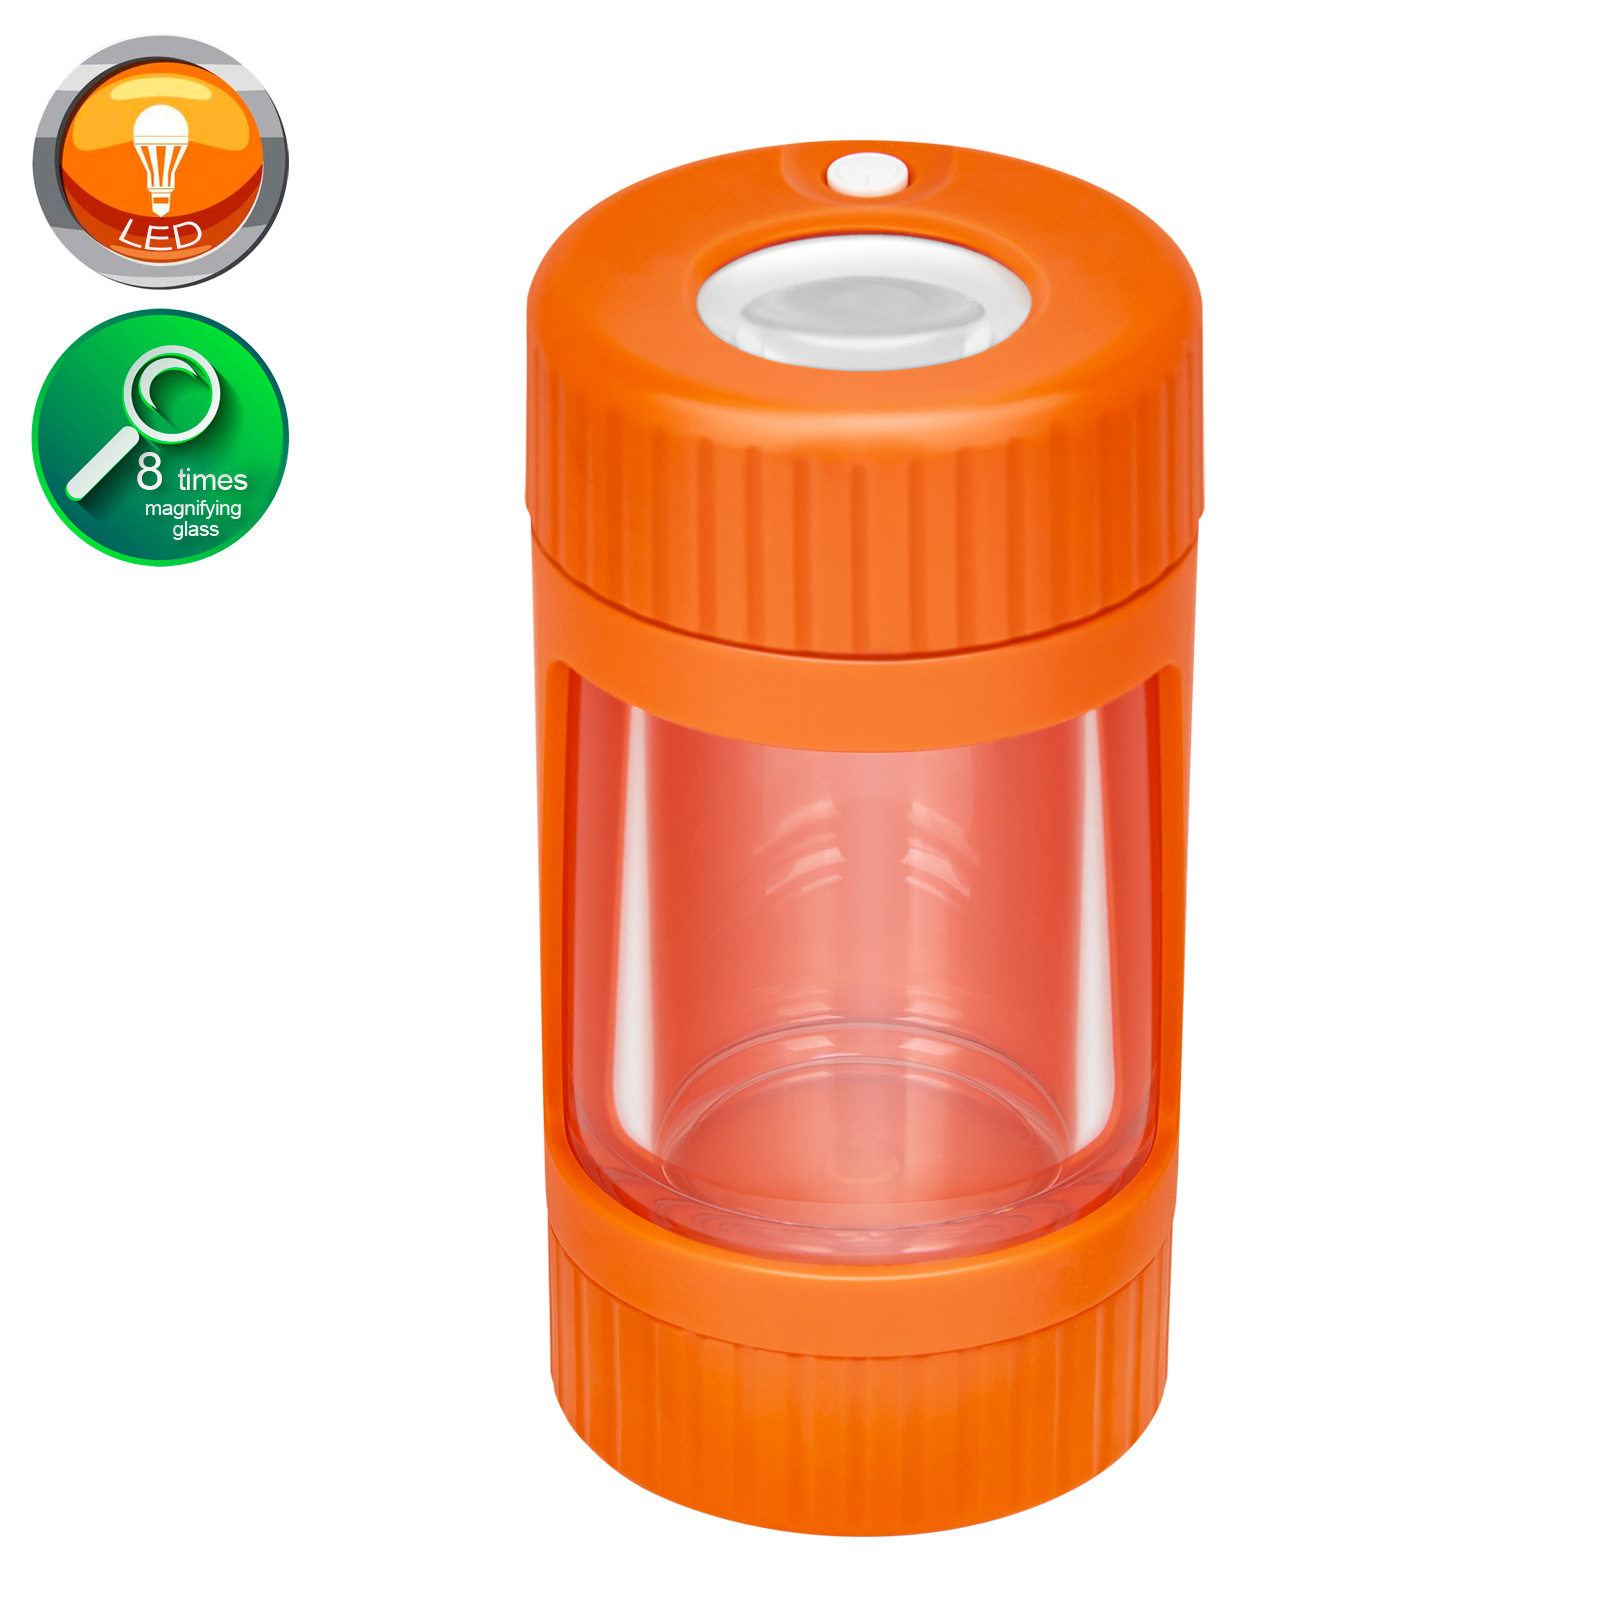 

Smoking Magnifying Jar with Light and Grinder Transparent Sealed Storage Container Herb LED Stash Bottles for Cigarette Tobacco Kitchen Usage Rechargeable Jars